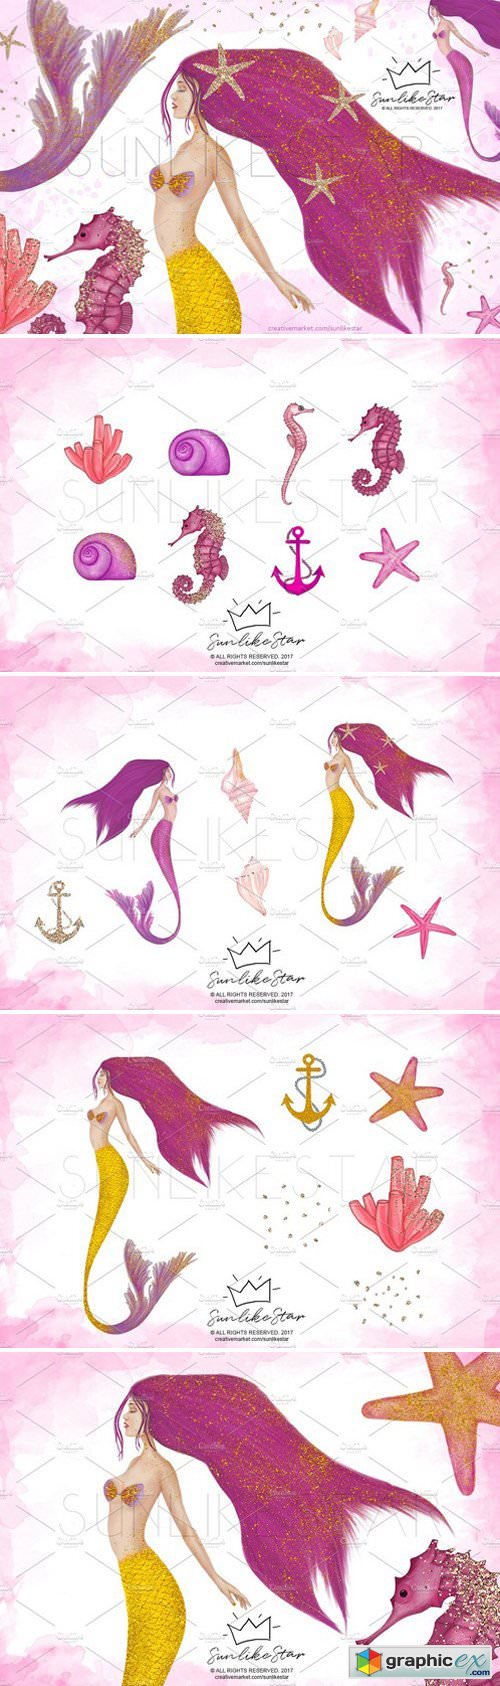 Mermaid Illustration Clip Art Pack